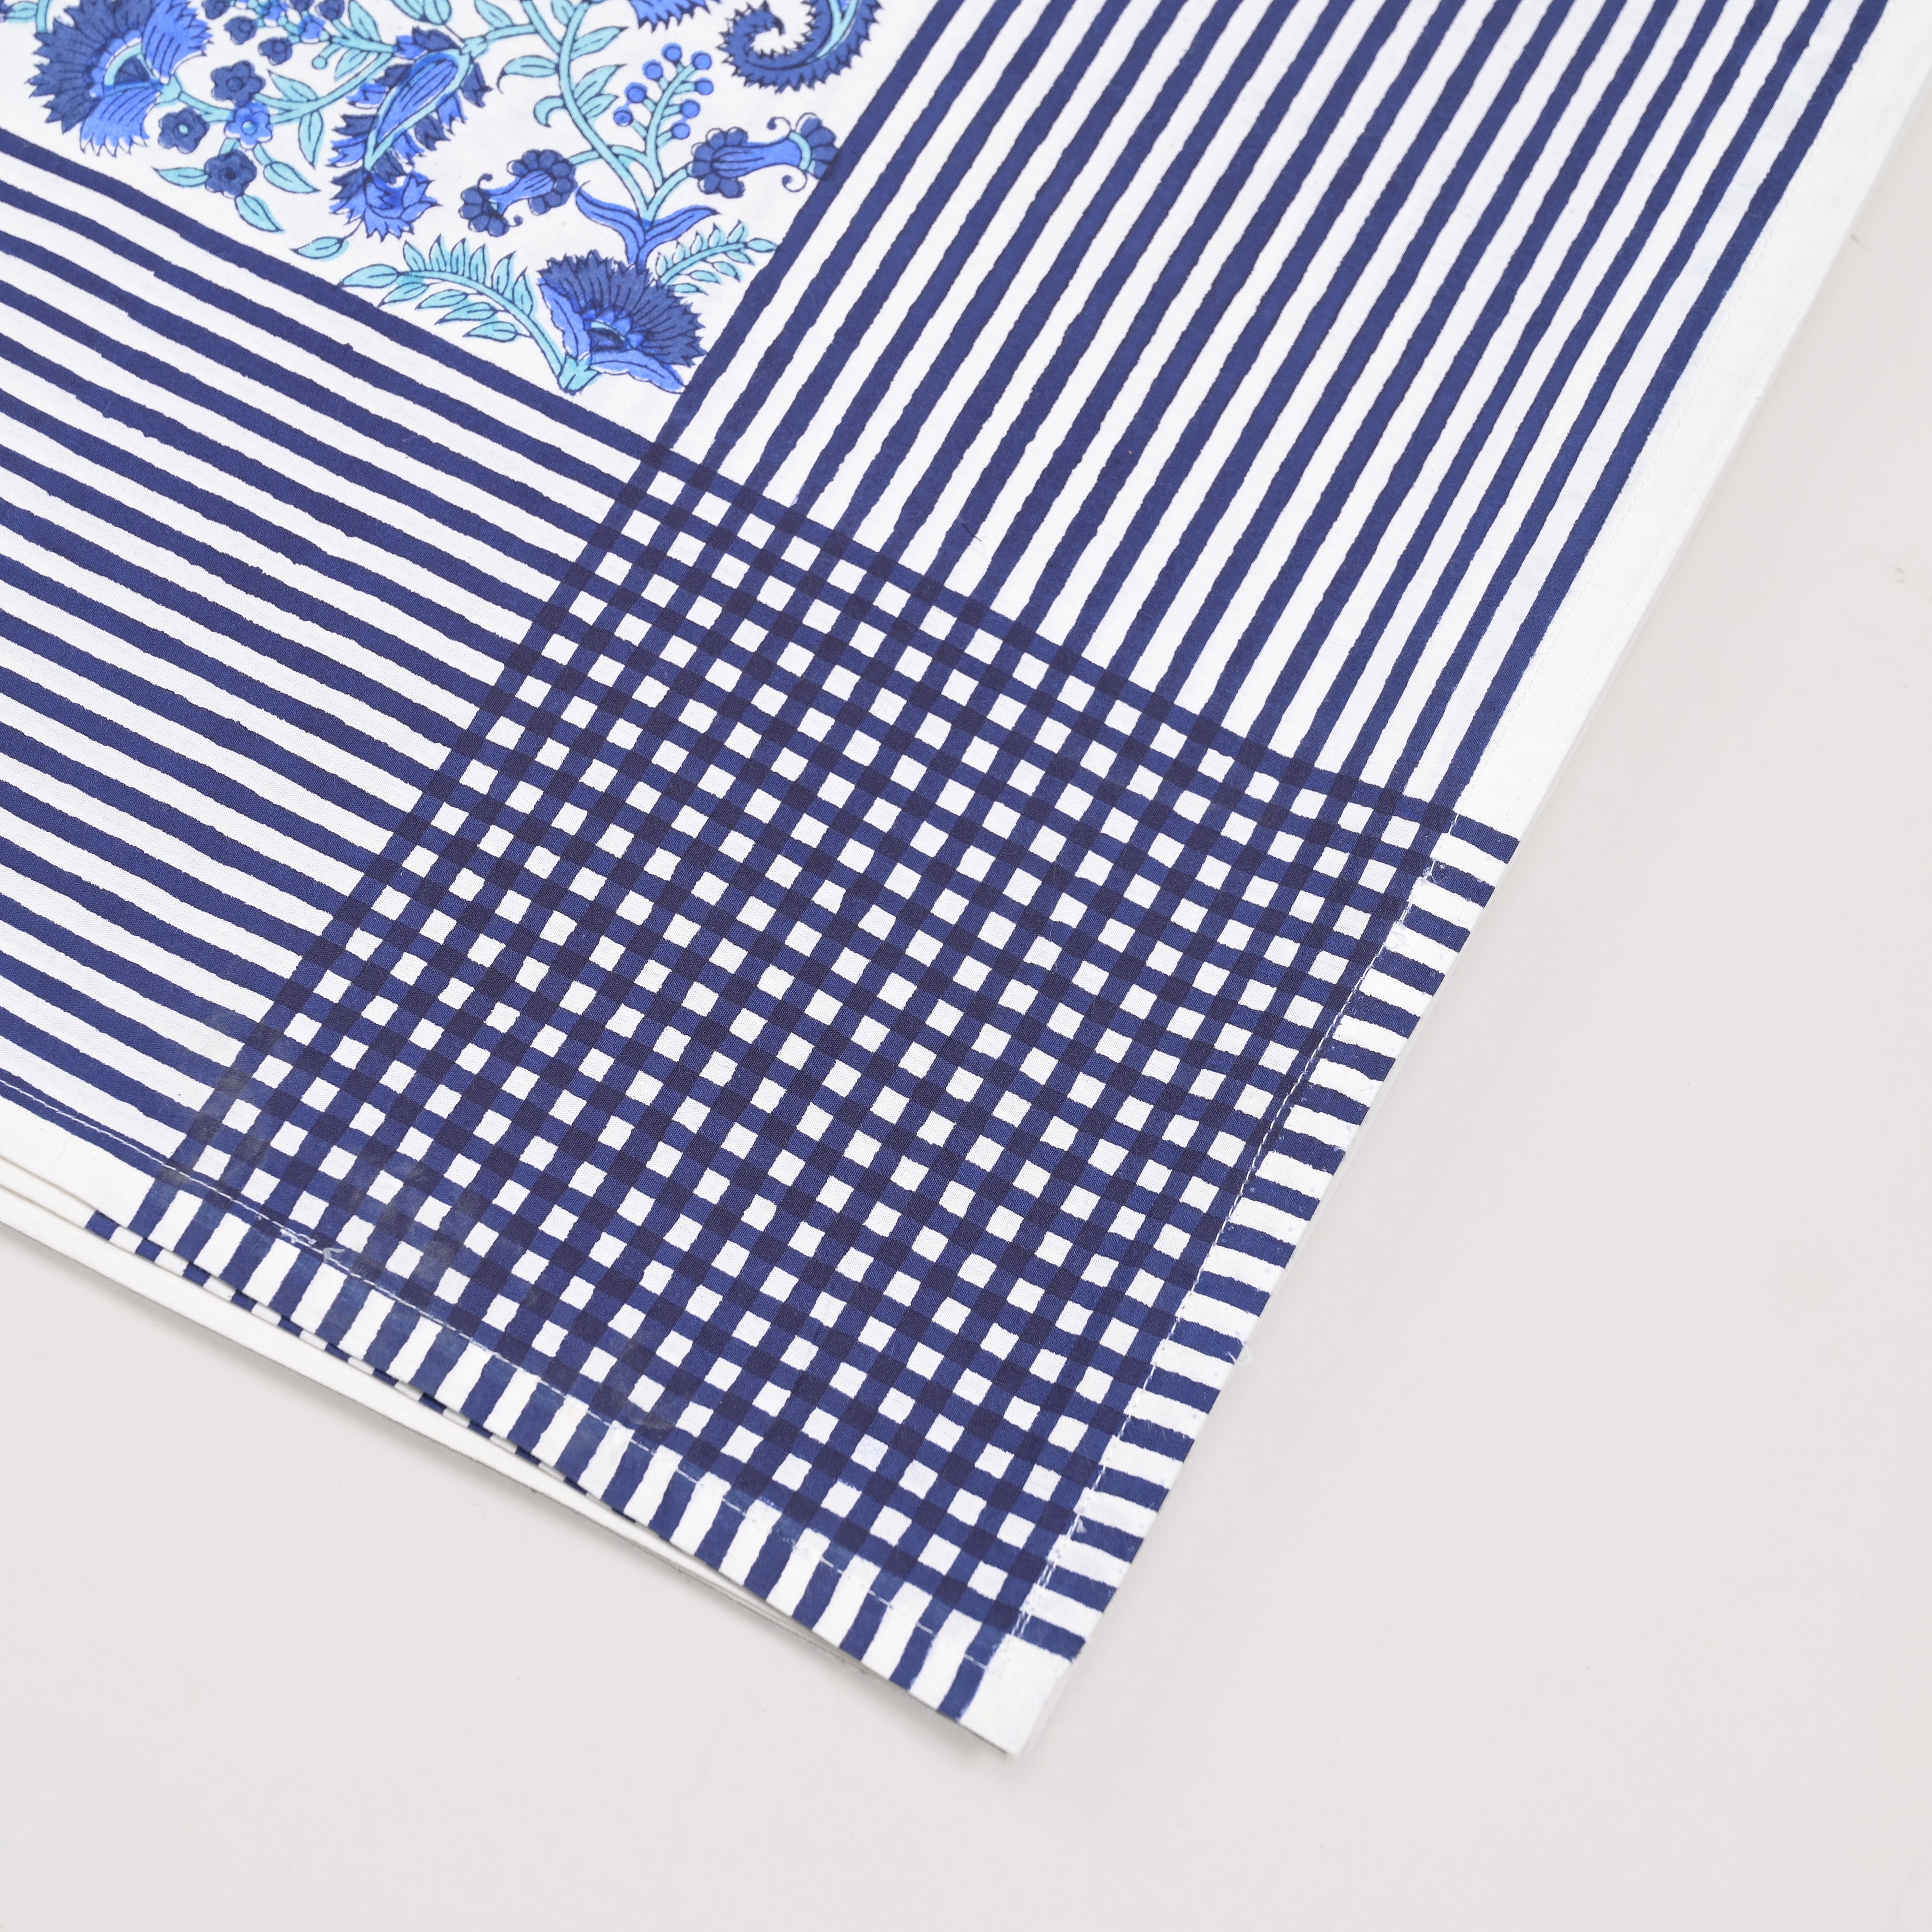 Anjuman Blue Block Printed Table Cover